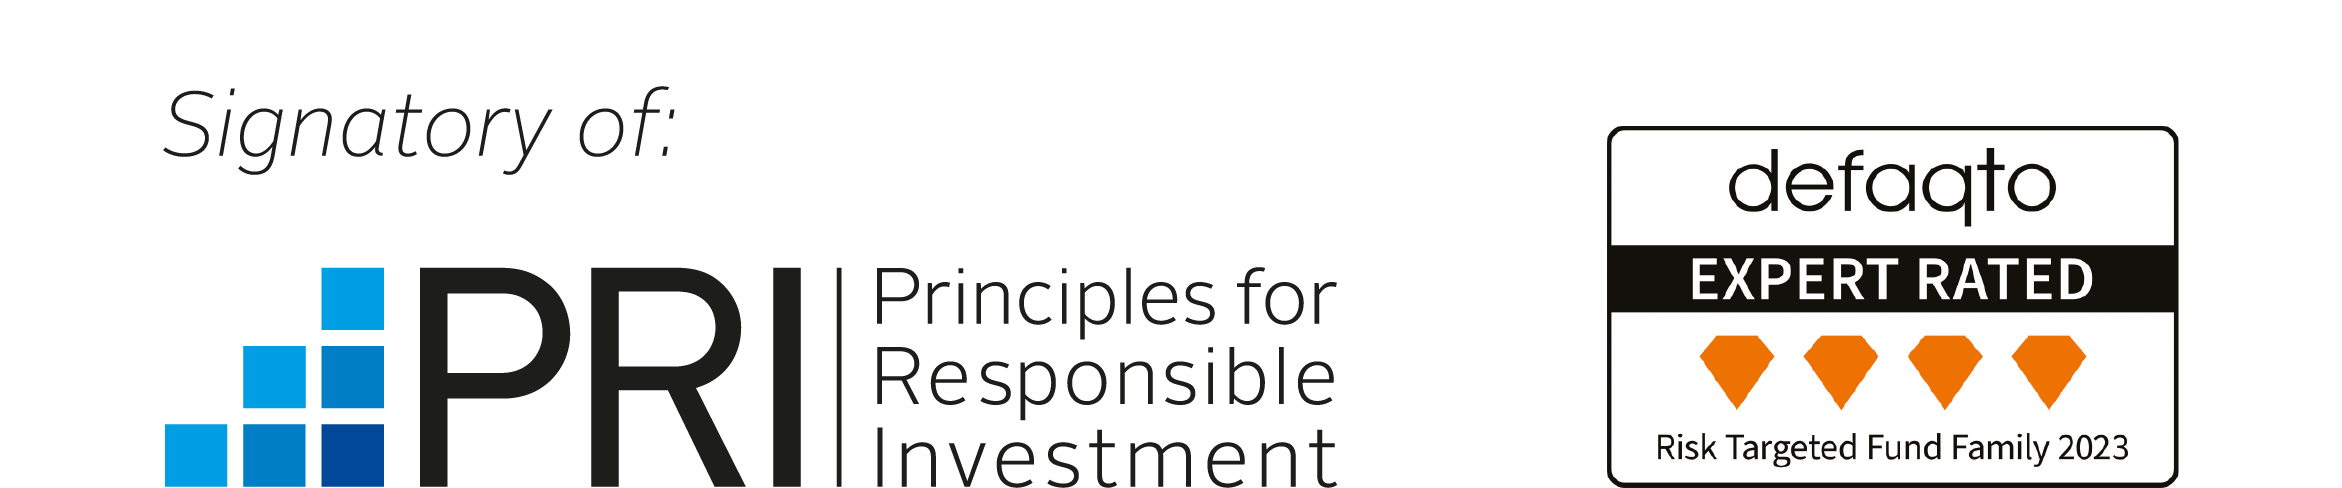 Signatory of Principles for Responsible Investment and defaqto 4 diamond logos